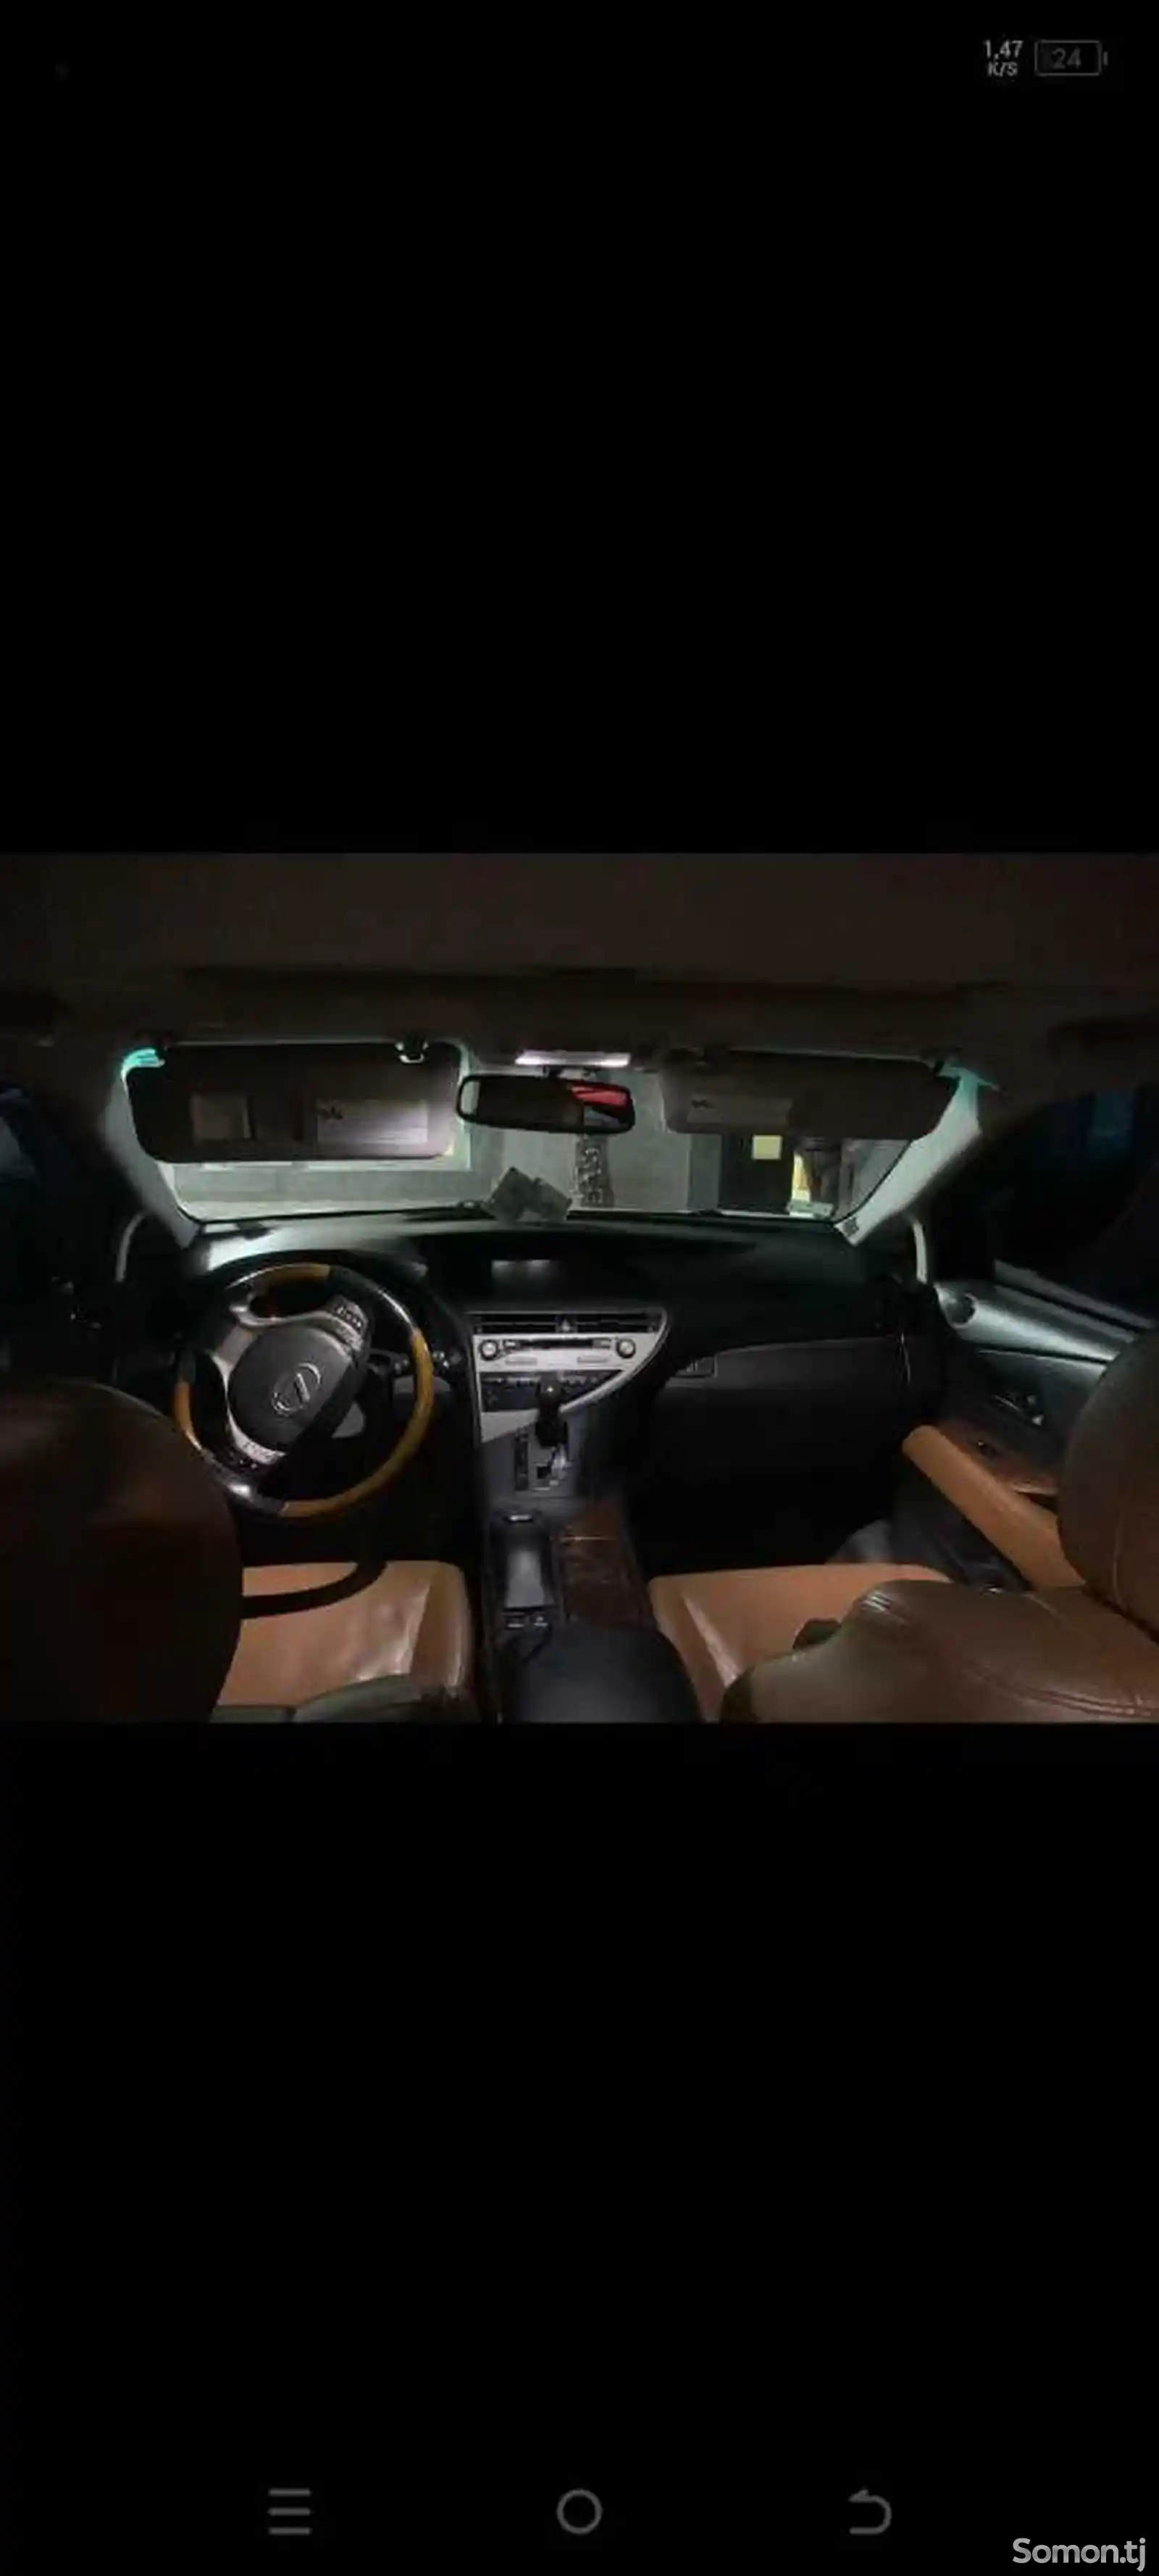 Lexus RX series, 2014-4